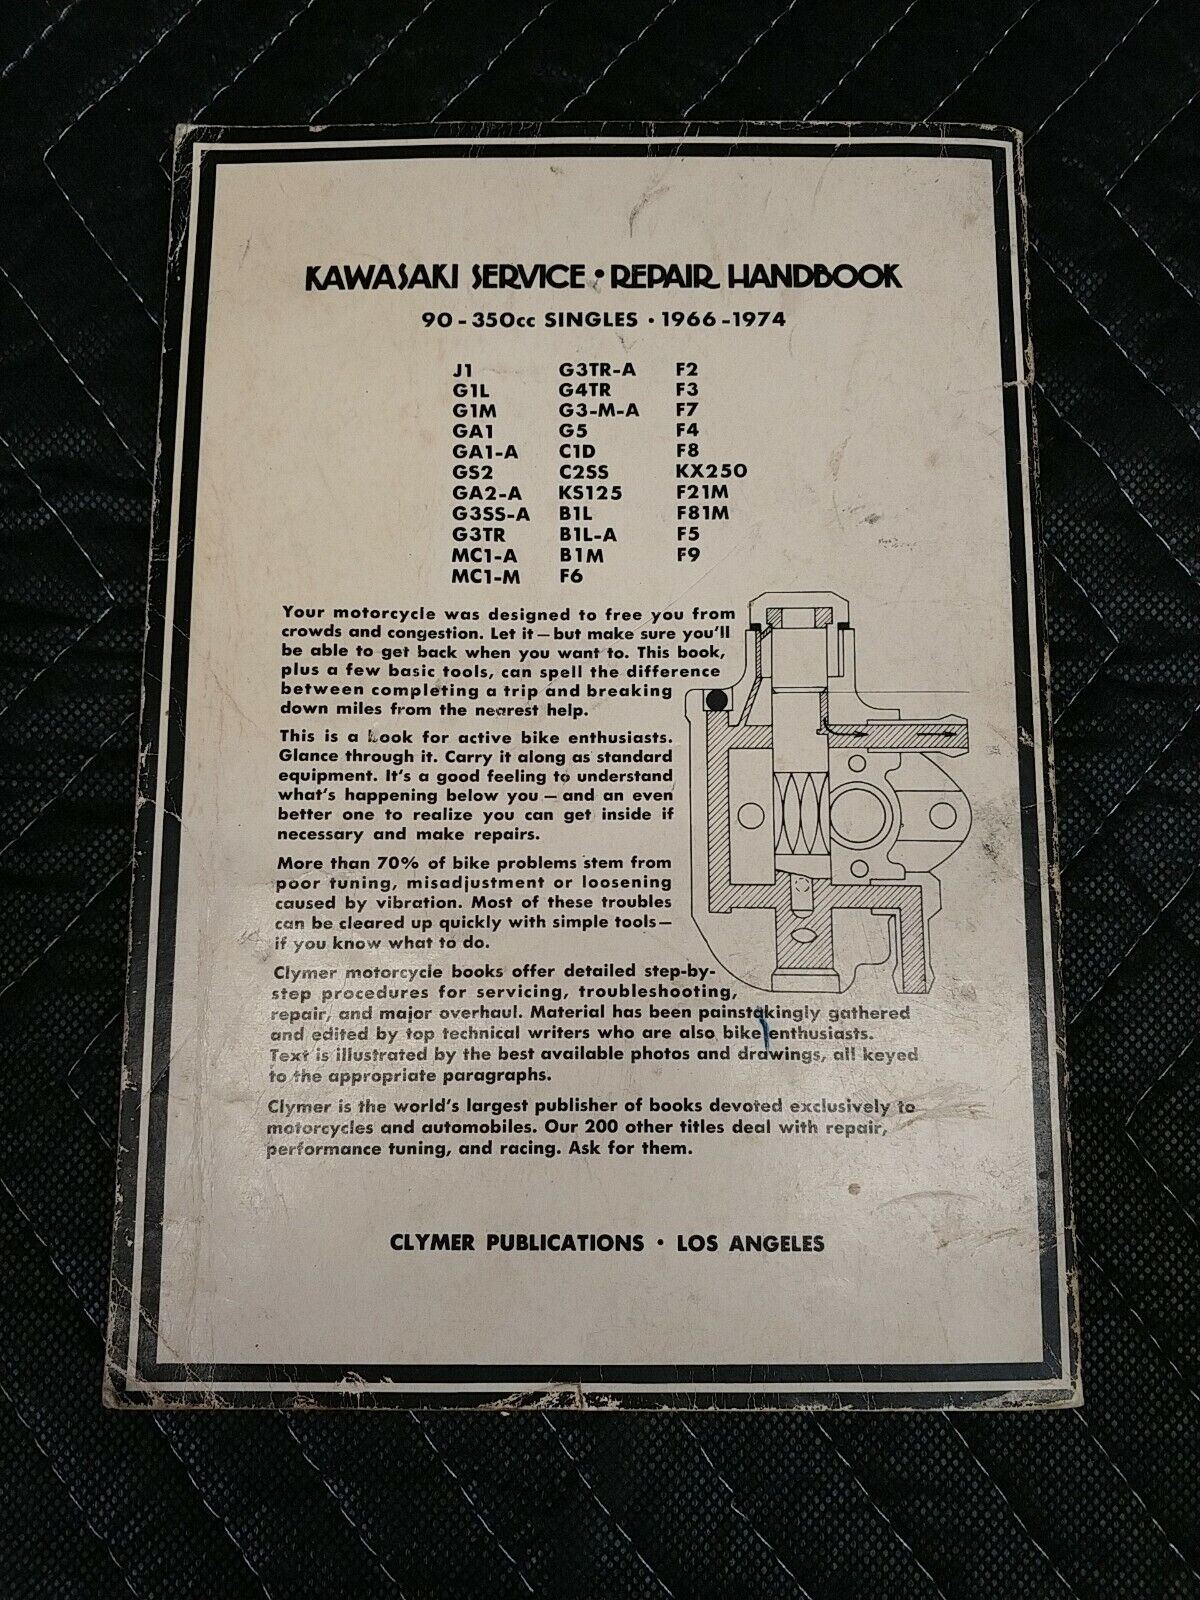 KAWASAKI Service Repair Handbook ~ Clymer ~ 90-350cc Singles 1966-1974